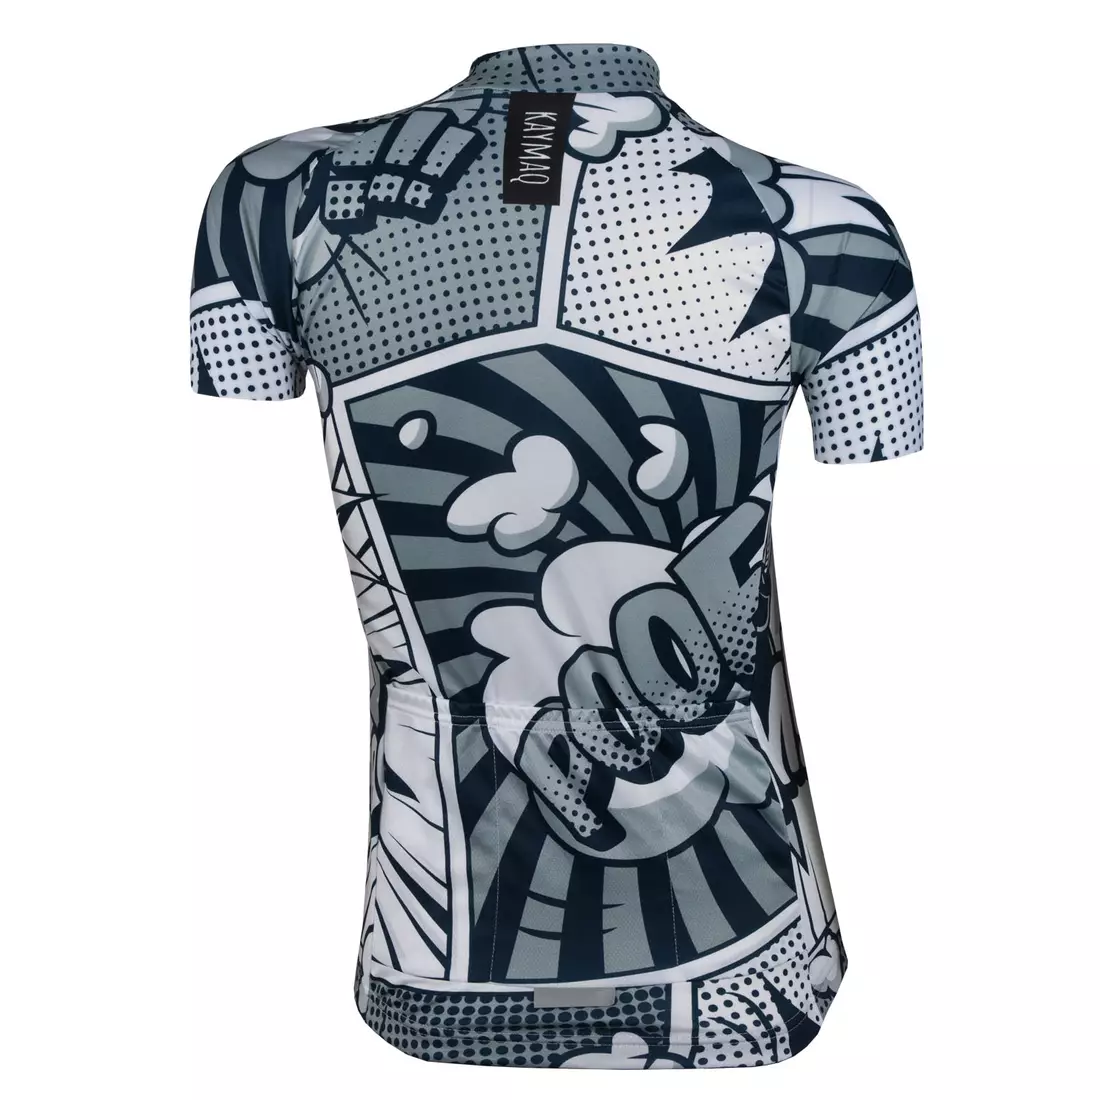 [Set] KAYMAQ DESIGN W24 tricou de ciclism feminin + KAYMAQ DESIGN W24 tricou de ciclism feminin Maneca scurta